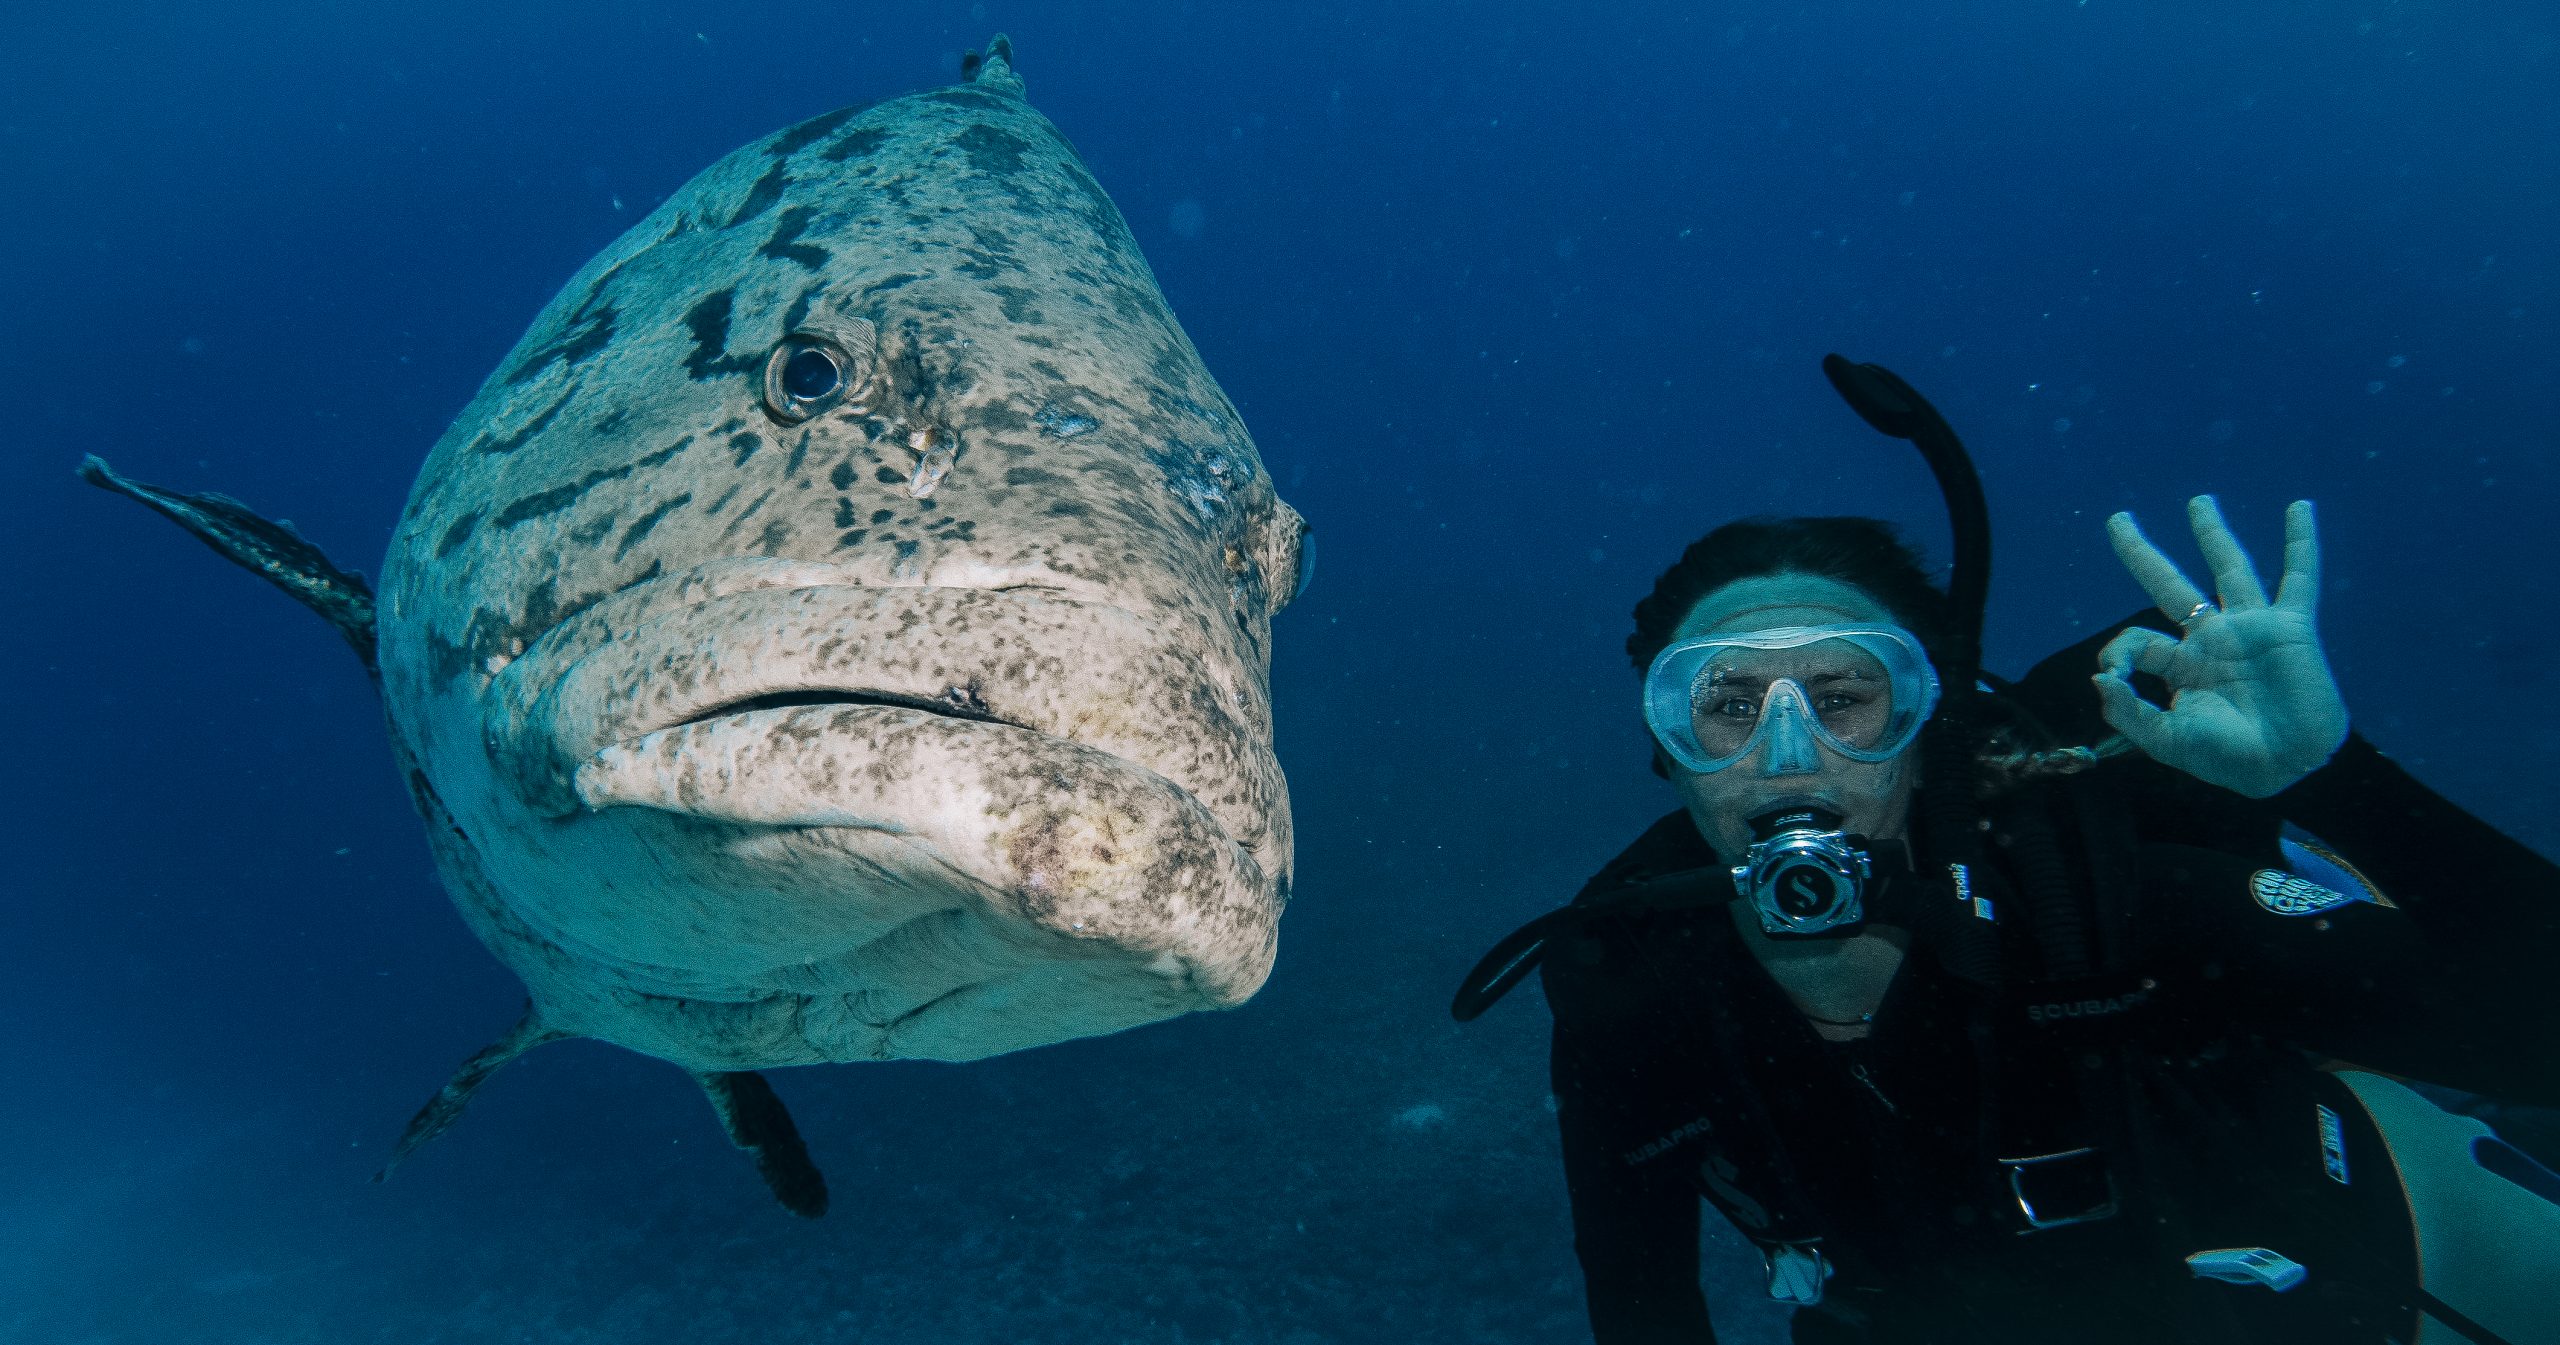 Scuba diving with Potato grouper fish